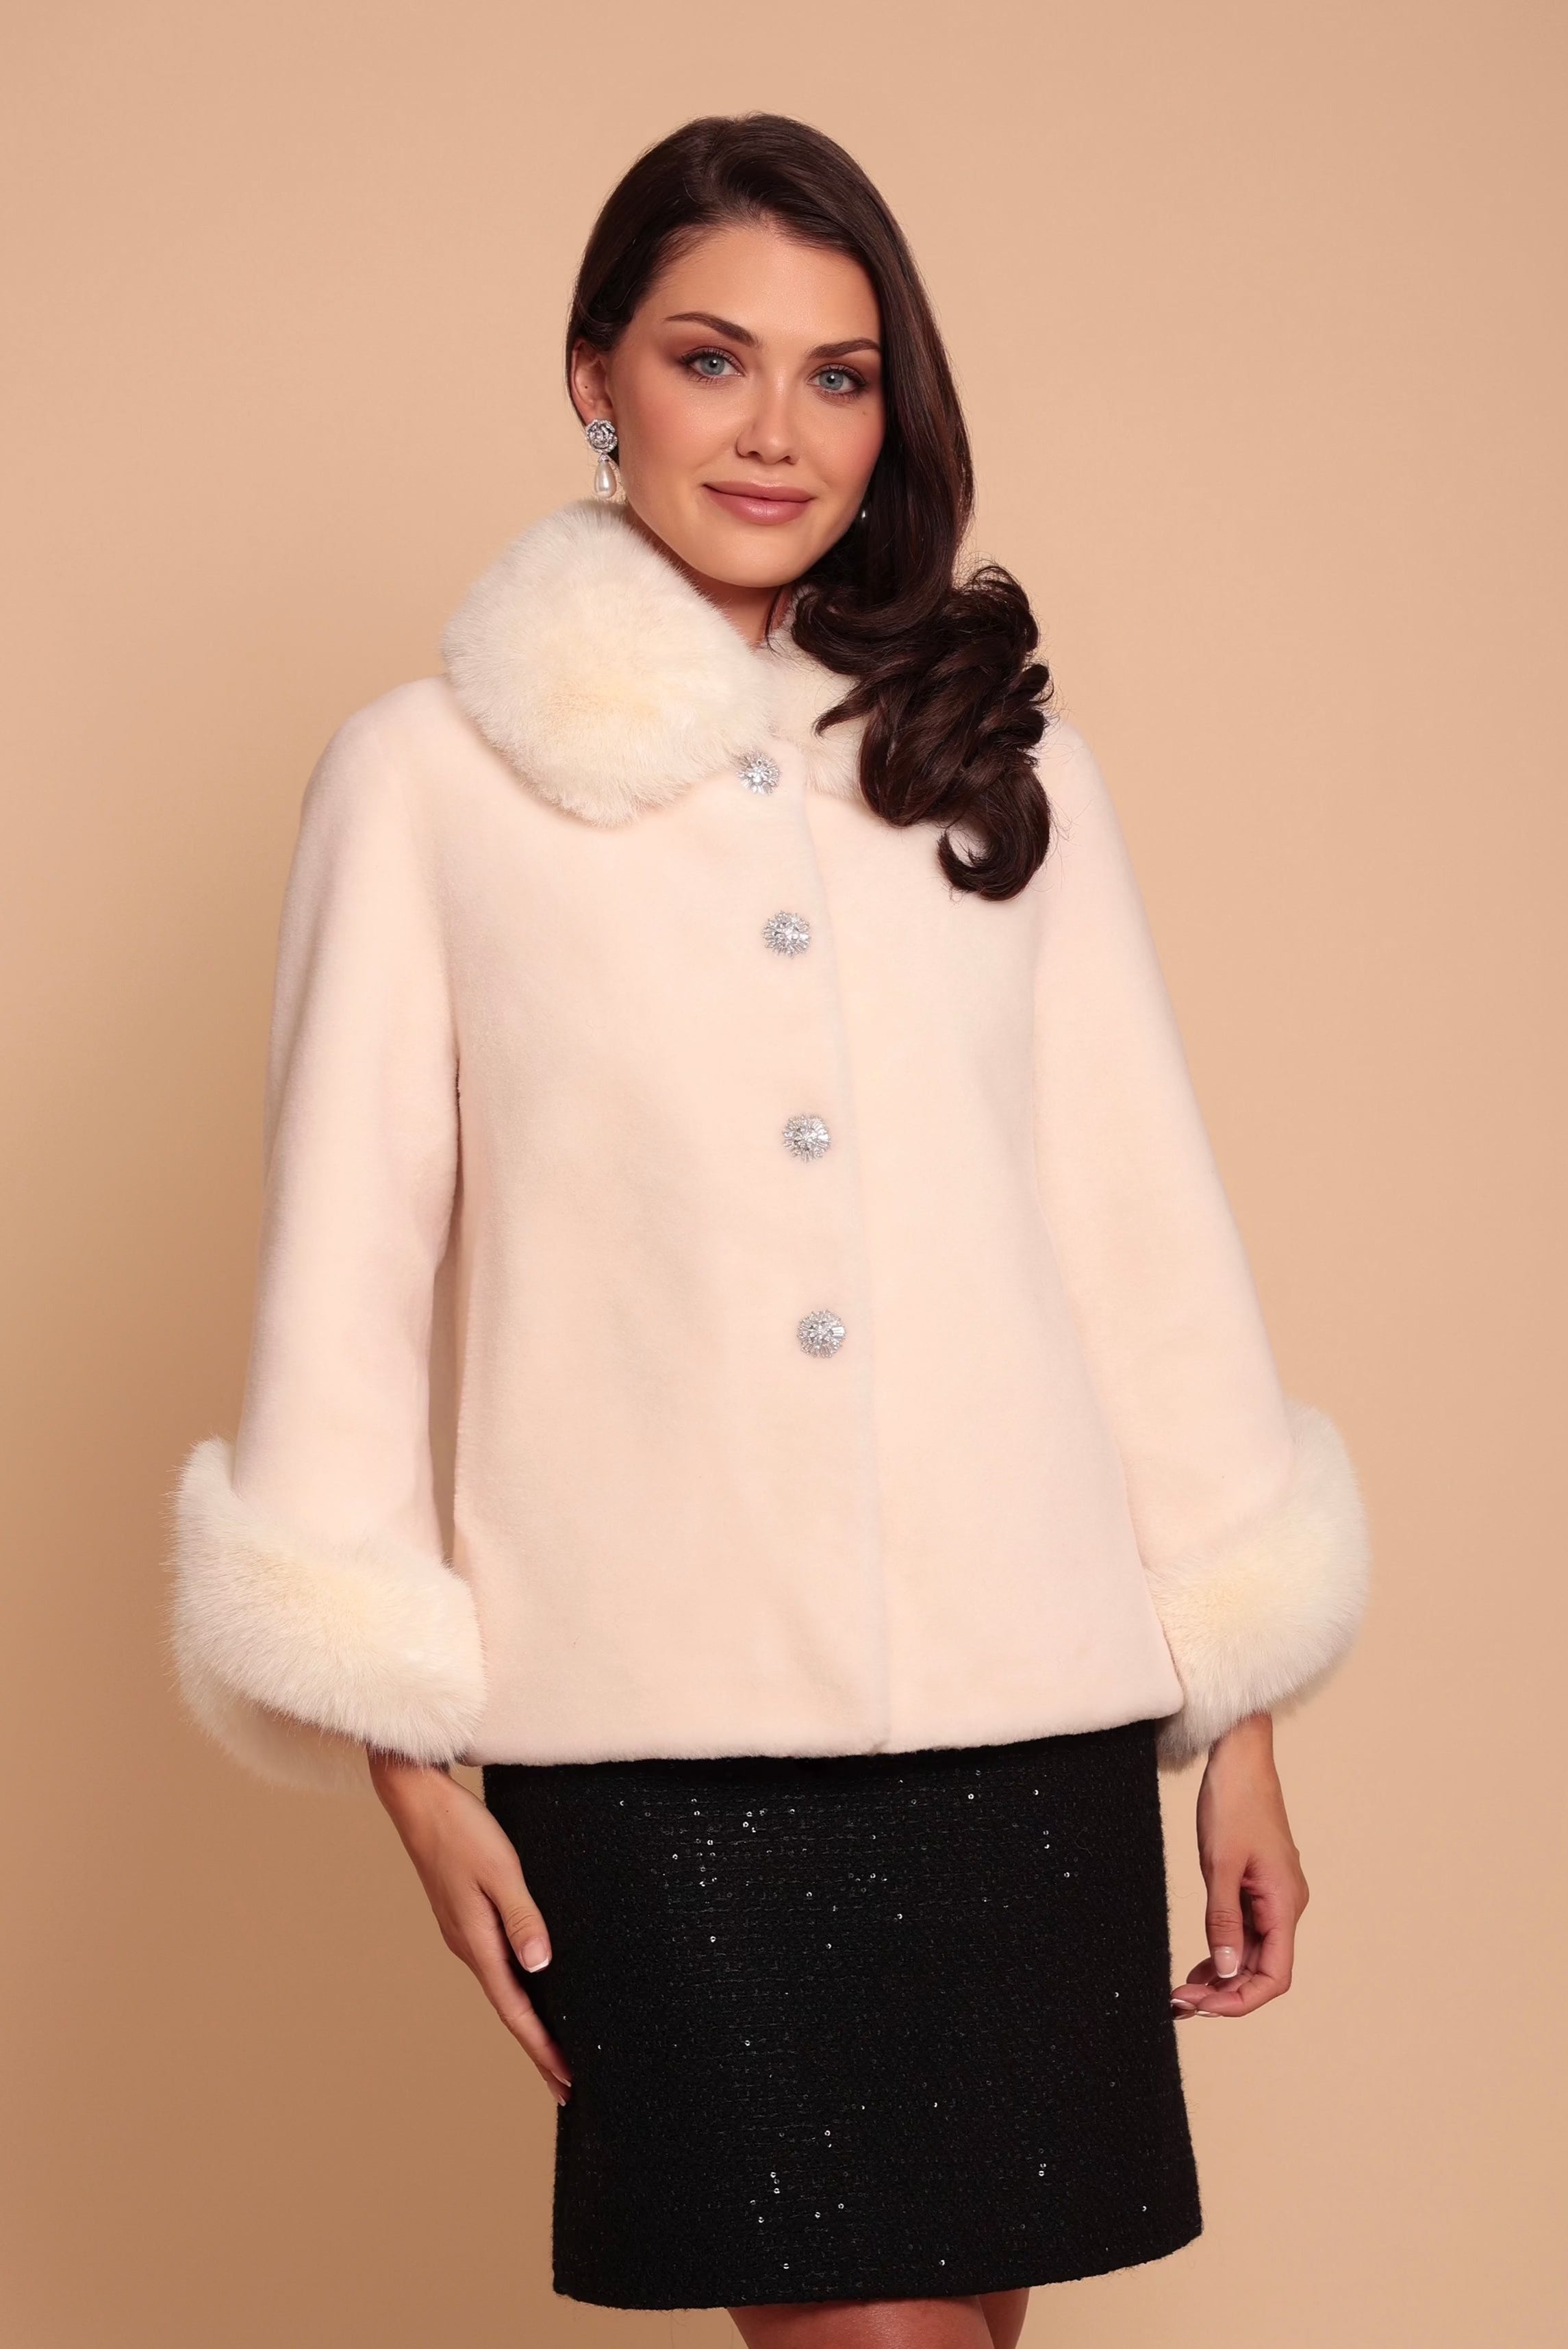 'Gene' Short Wool Coat with Faux Fur Collar in Bianco